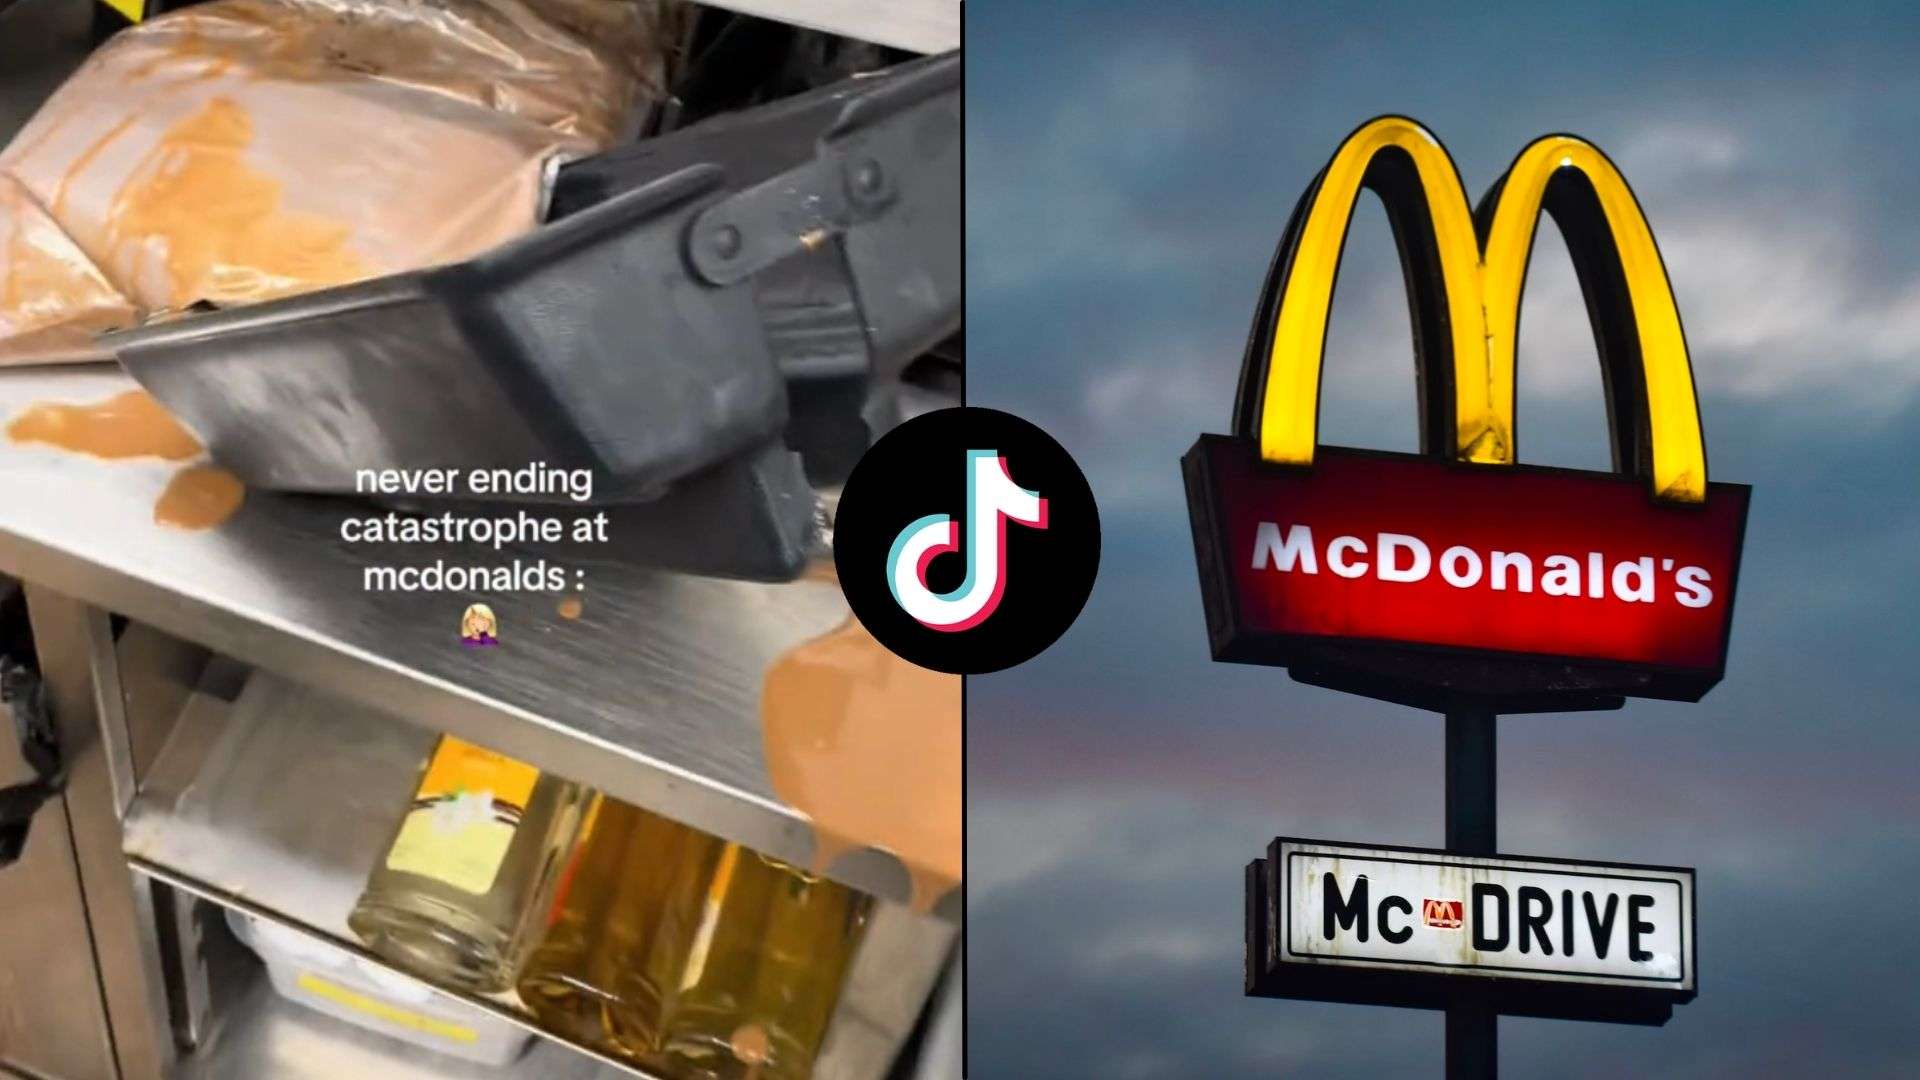 McDonald's logo alongside screenshot of liquid spilled in kitchen